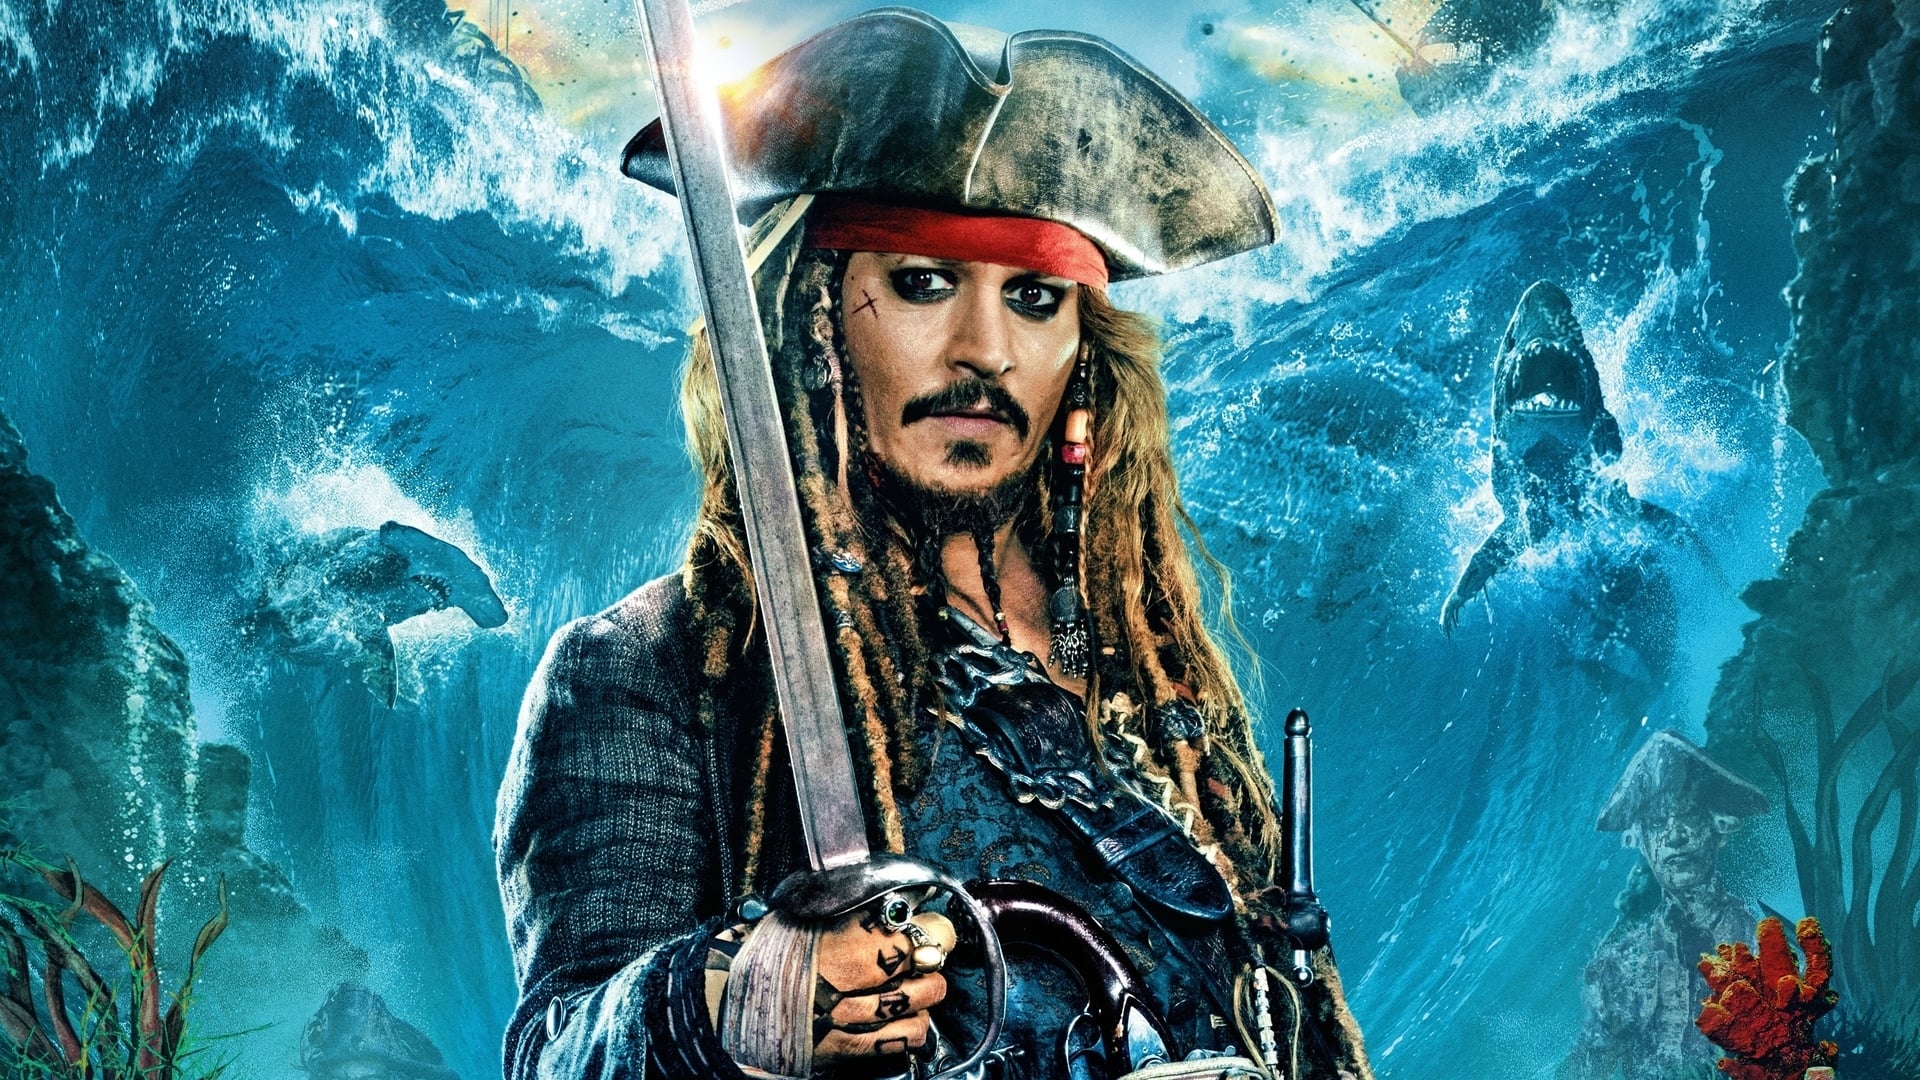 Piráti Karibiku: Salazarova pomsta (2017)